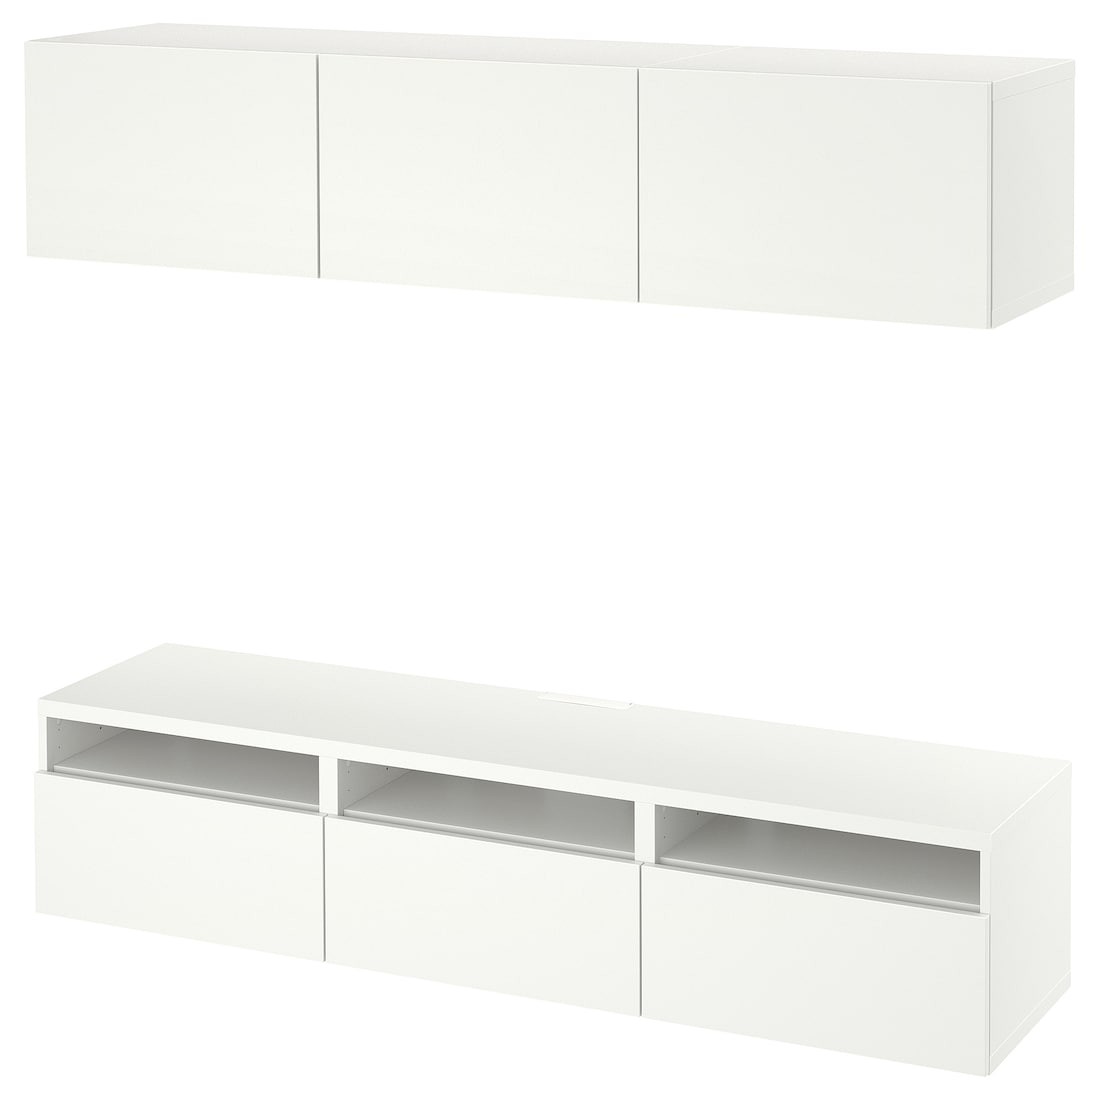 IKEA BESTÅ БЕСТО Тумба под ТВ, белый / Lappviken белый, 180x42x185 см 19476818 194.768.18